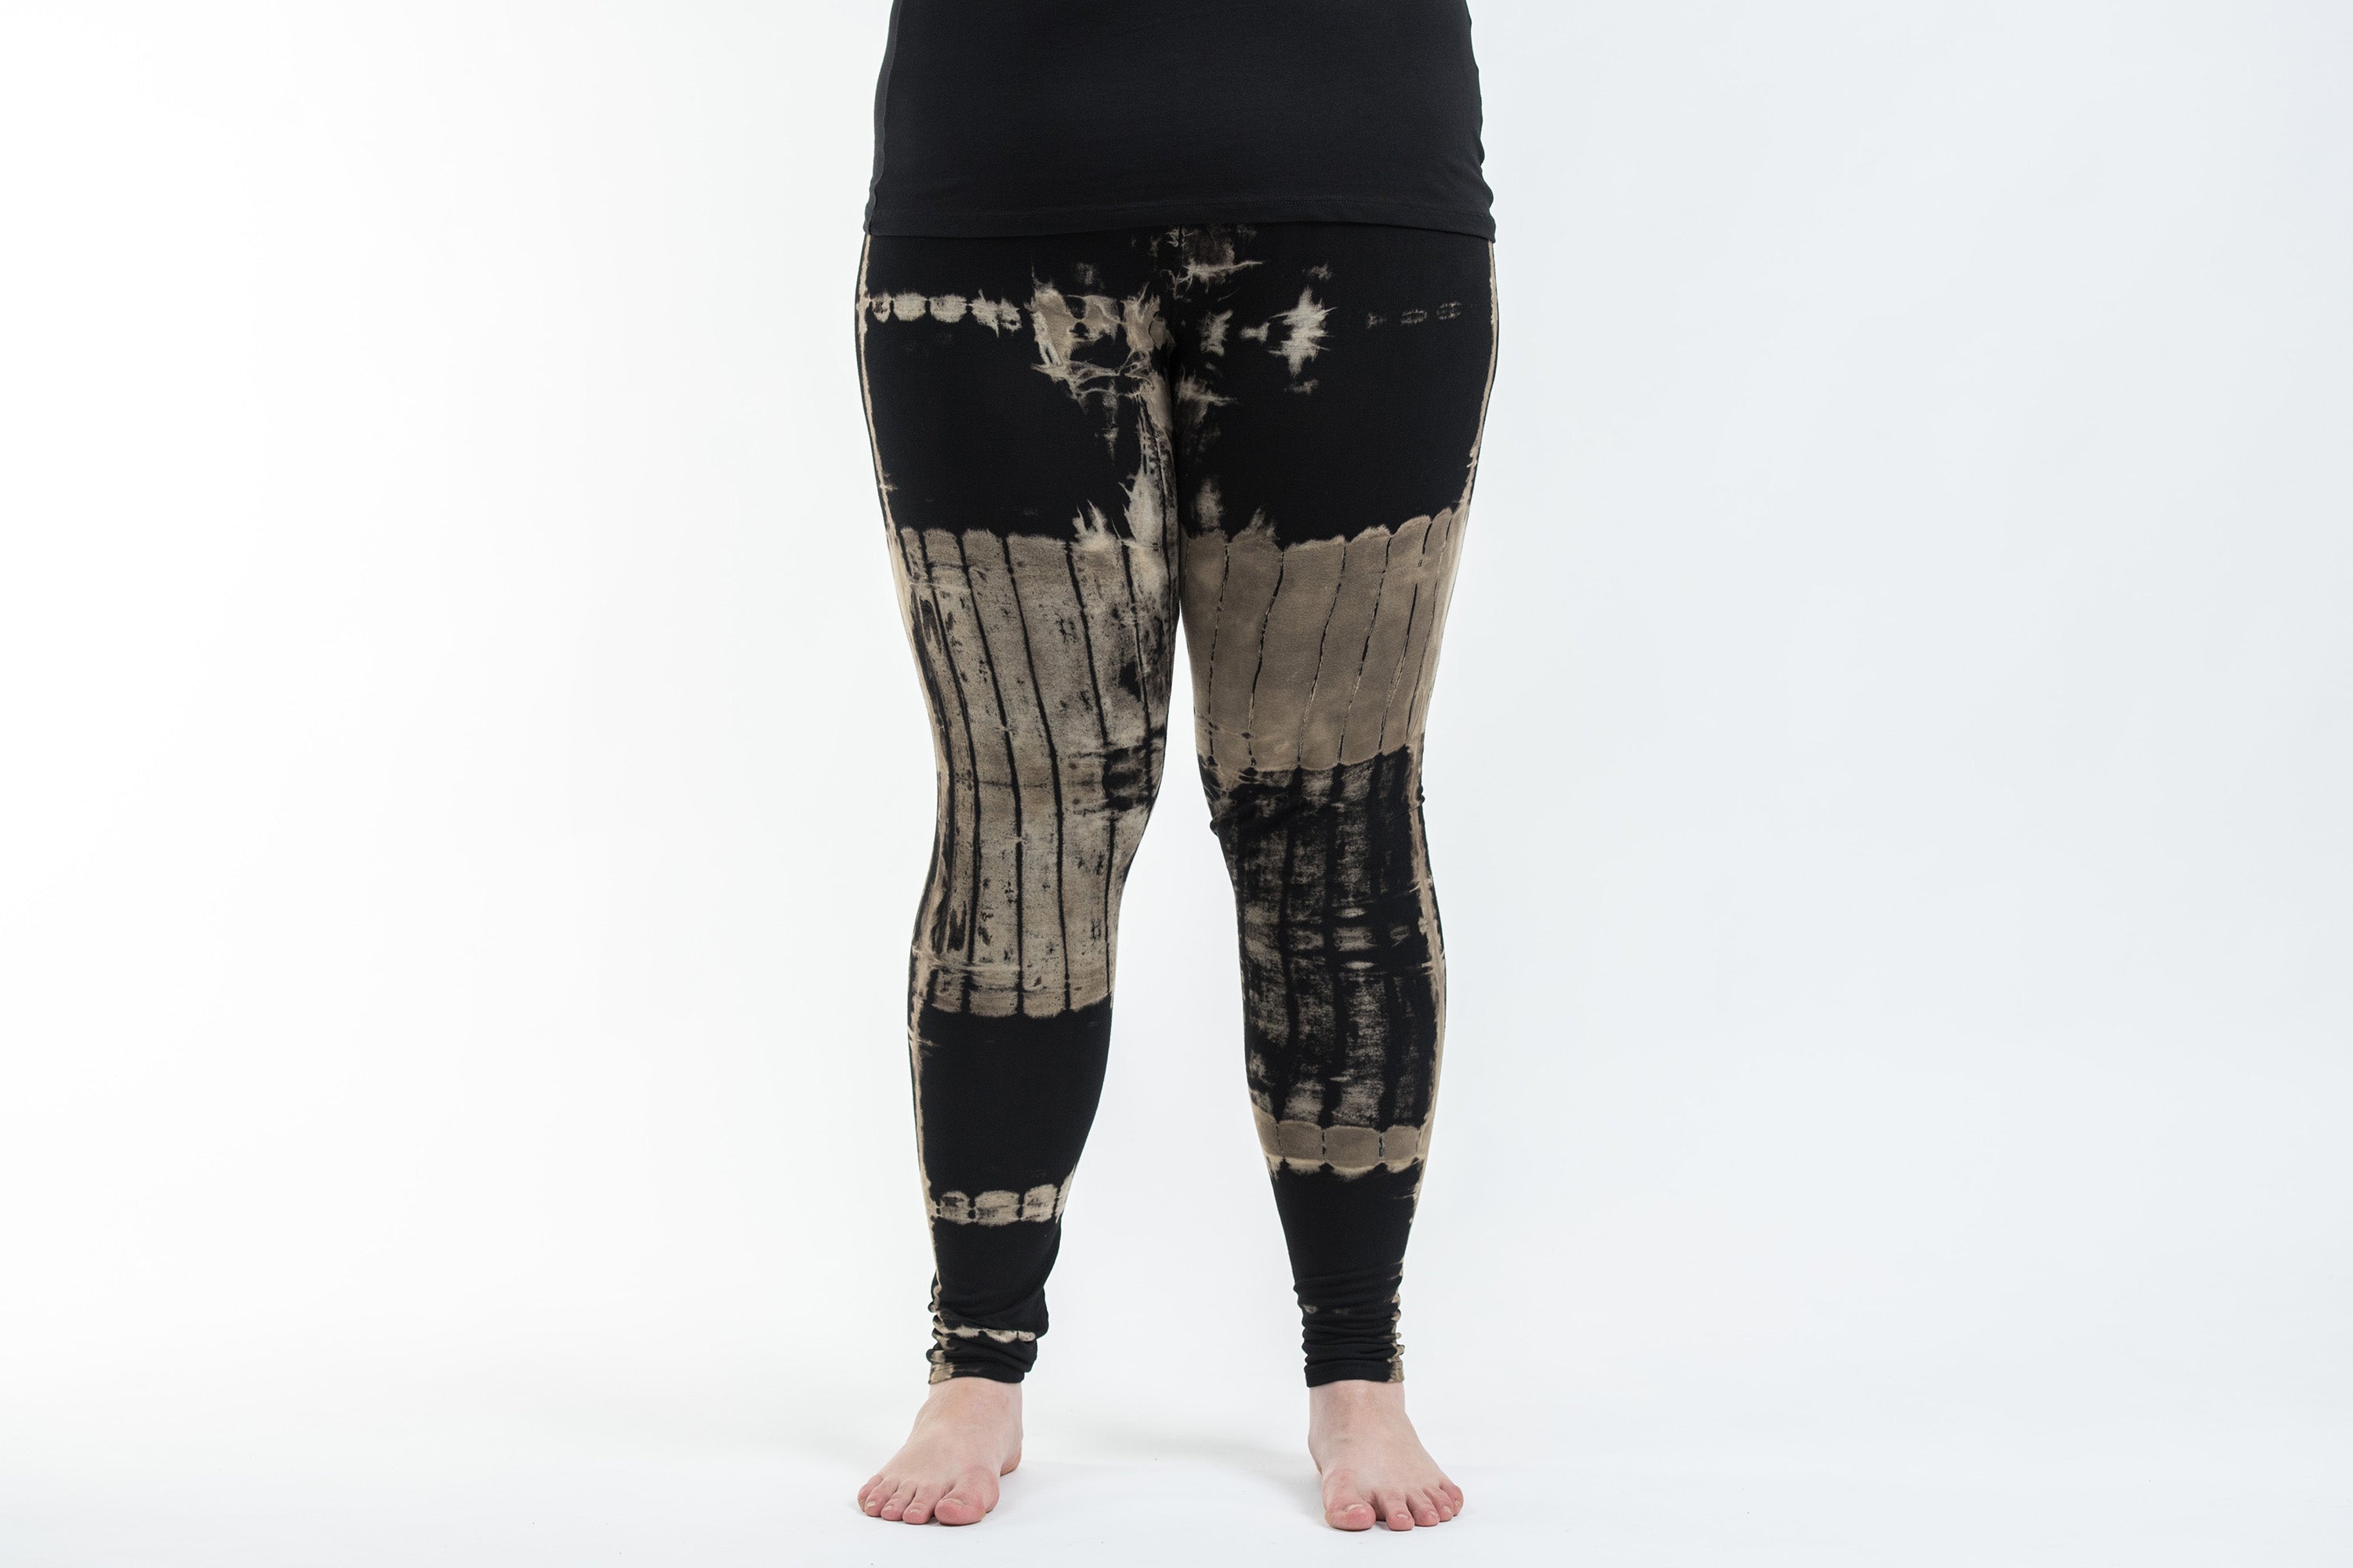 Plus Size Solid Color Cotton Leggings in Gray – Harem Pants